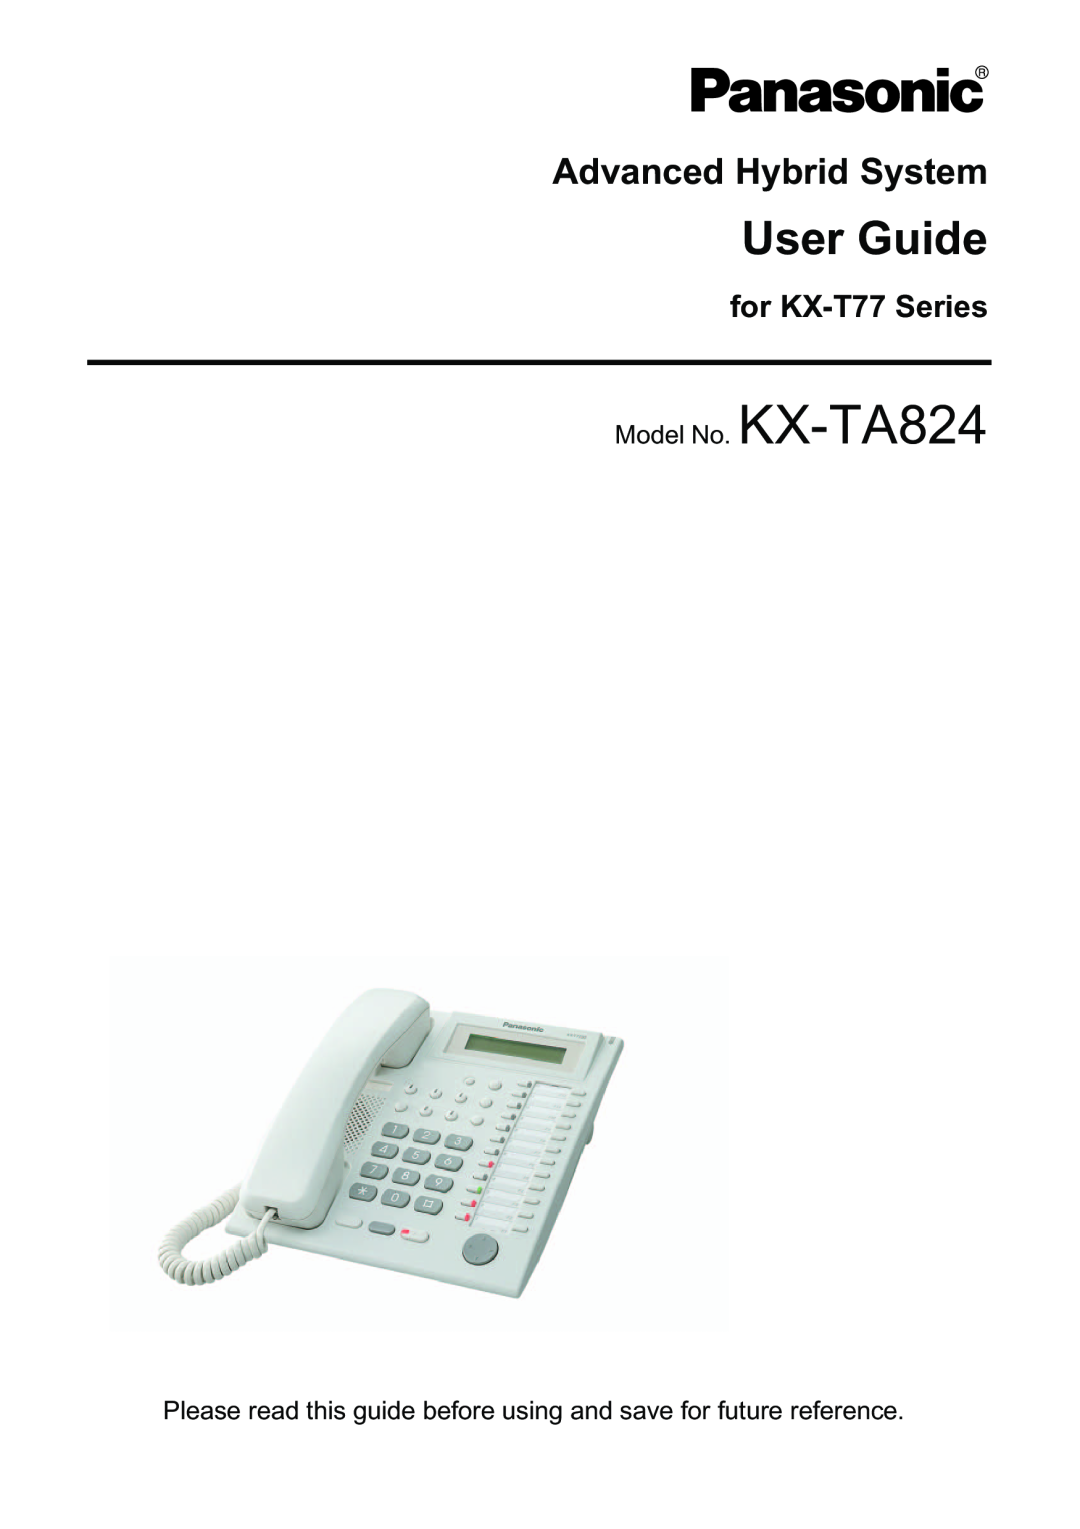 Panasonic manual User Guide, Advanced Hybrid System, for KX-T77 Series, Model No. KX-TA824 